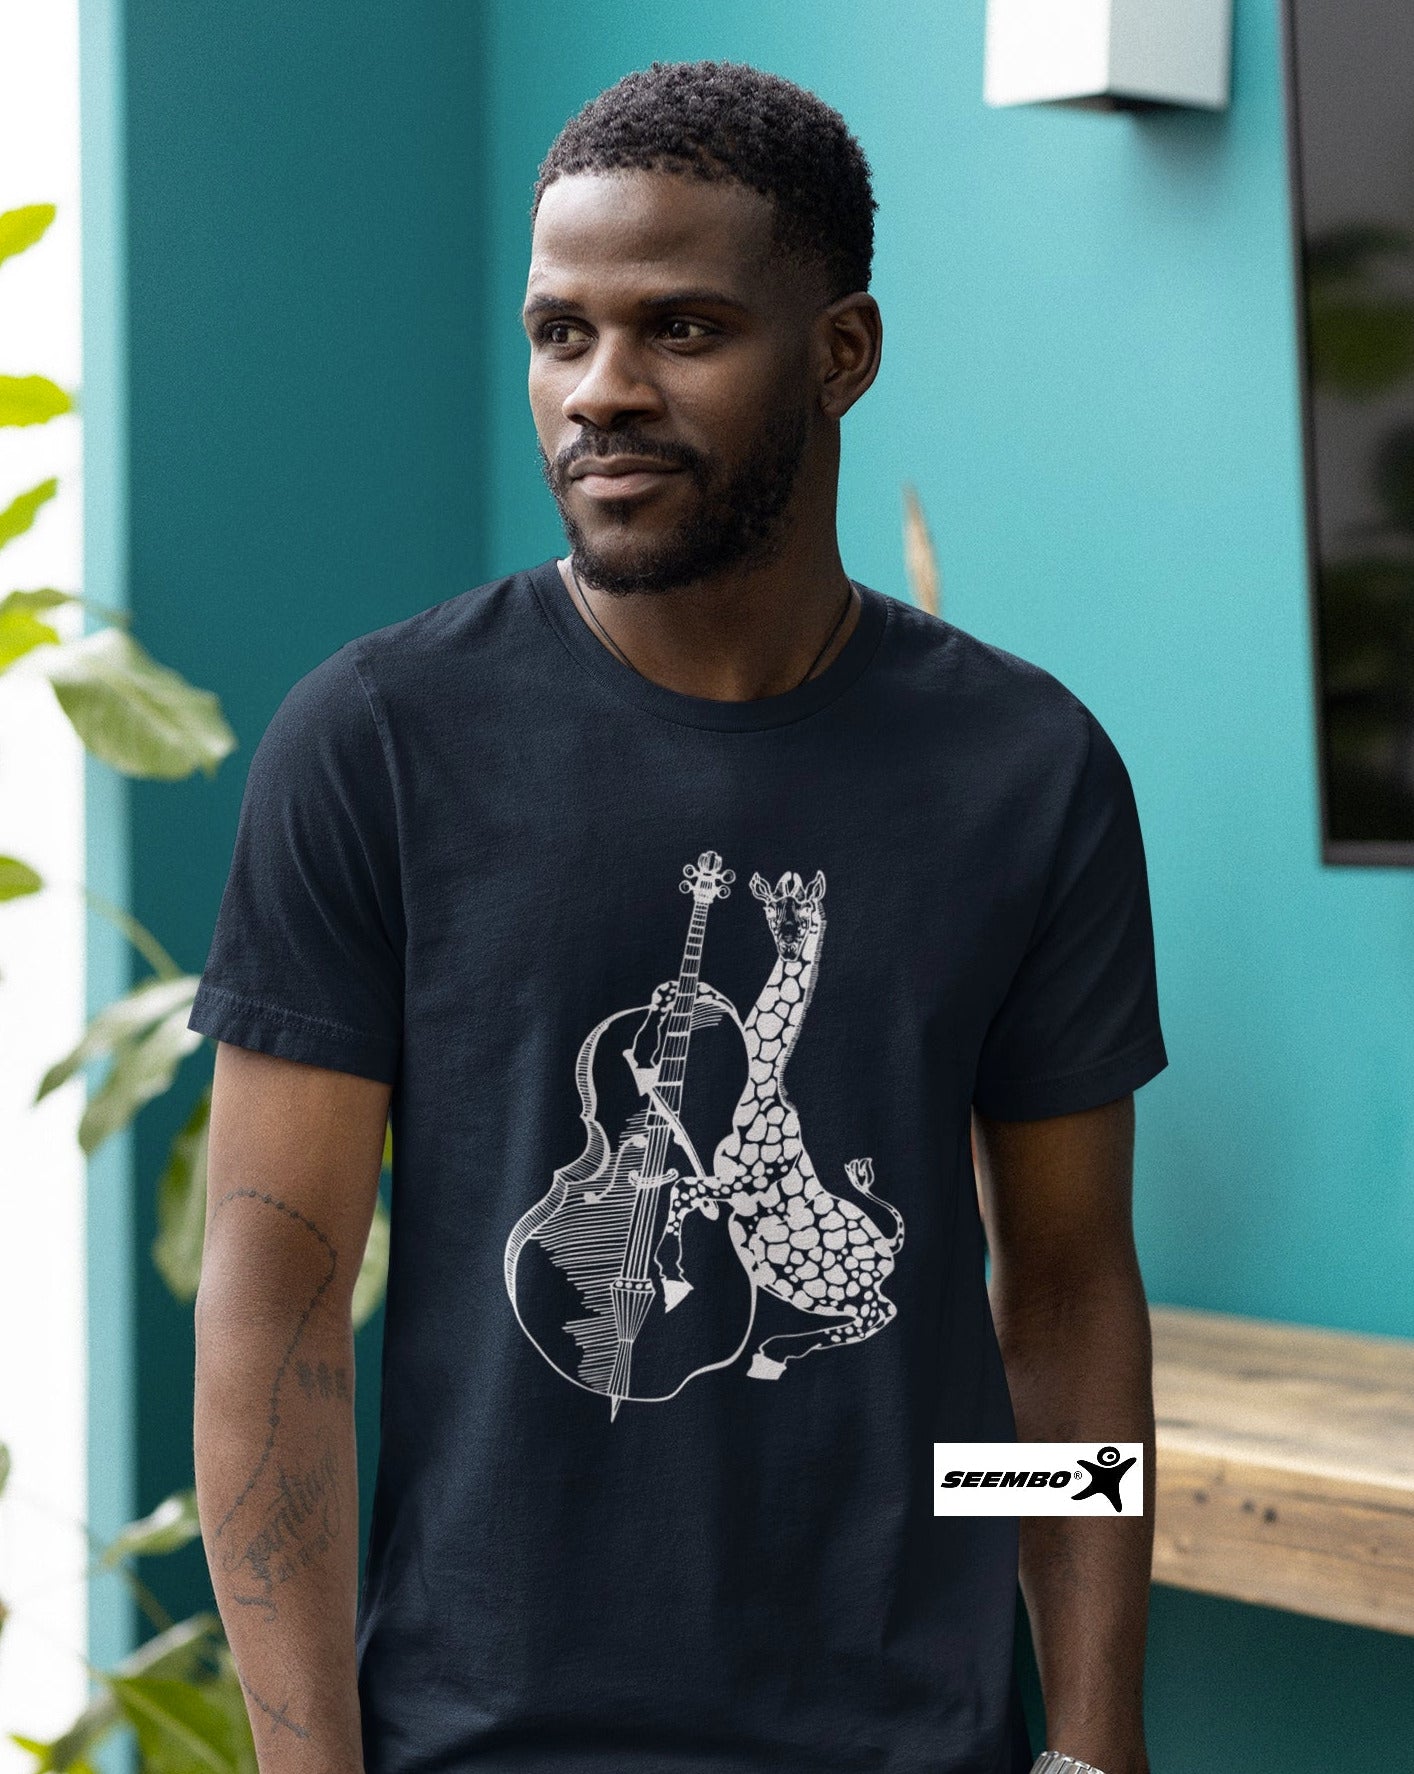 man-wearing-navy-t-shirt-with-giraffe-playing-cello-design